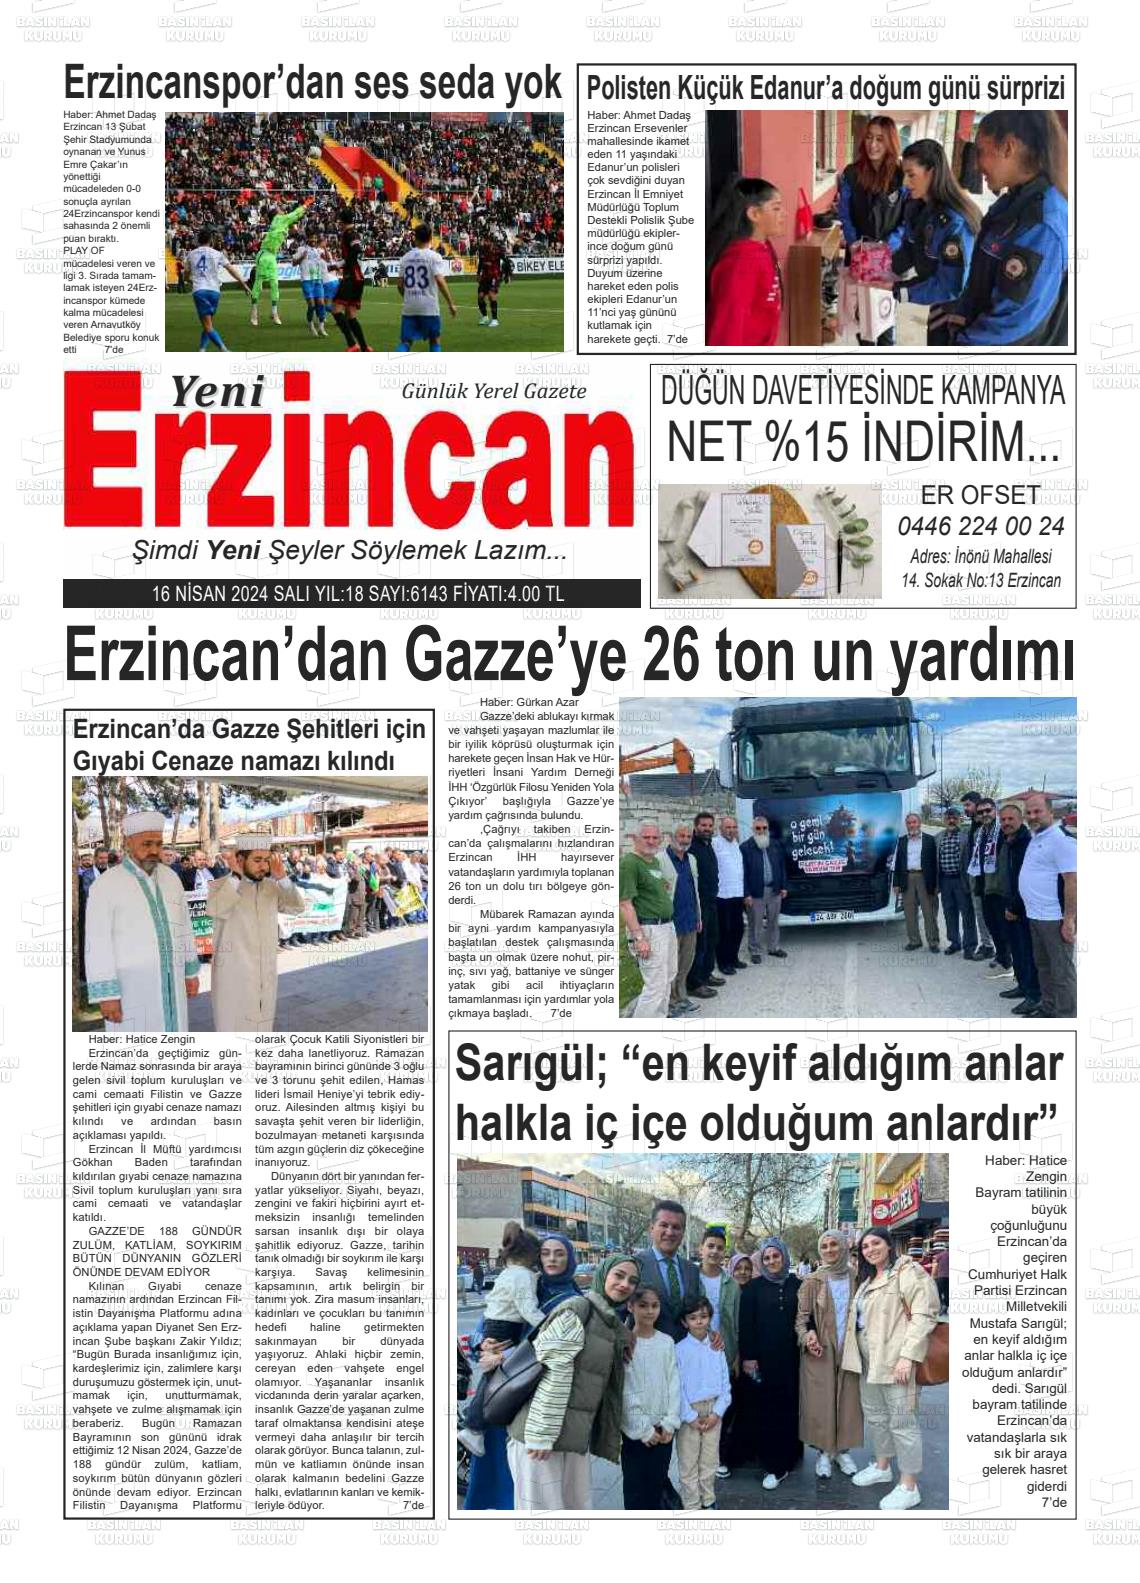 18 Nisan 2024 Yeni Erzincan Gazete Manşeti